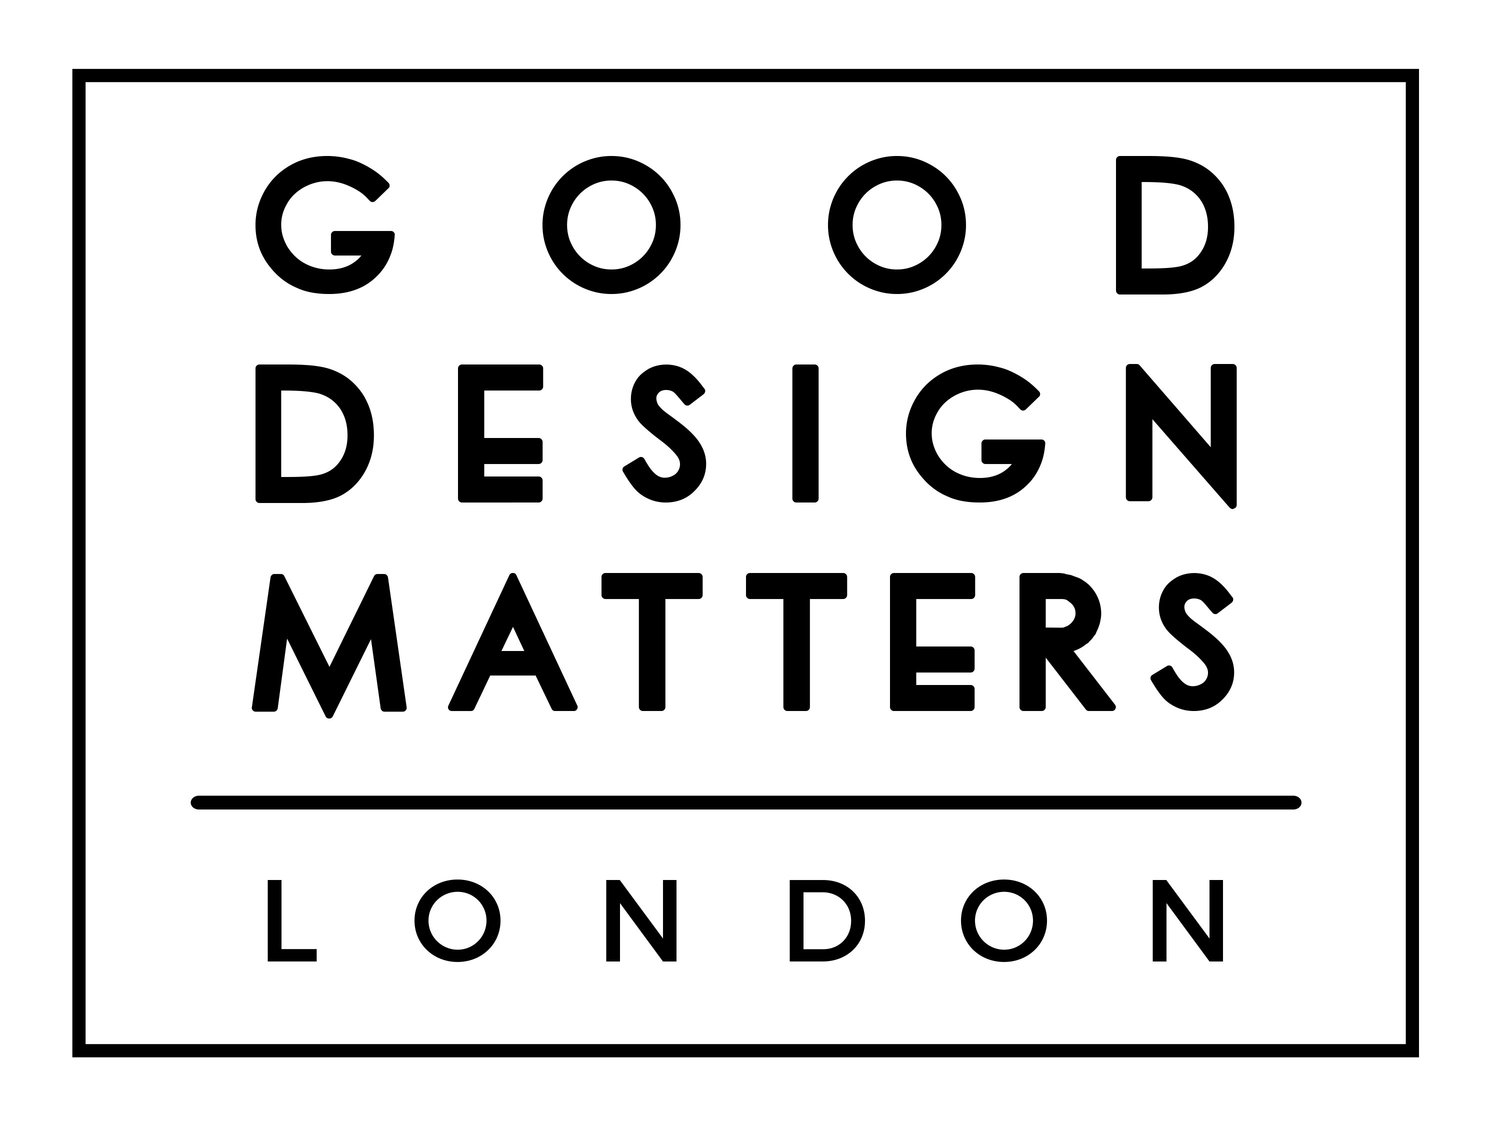 Good Design Matters London